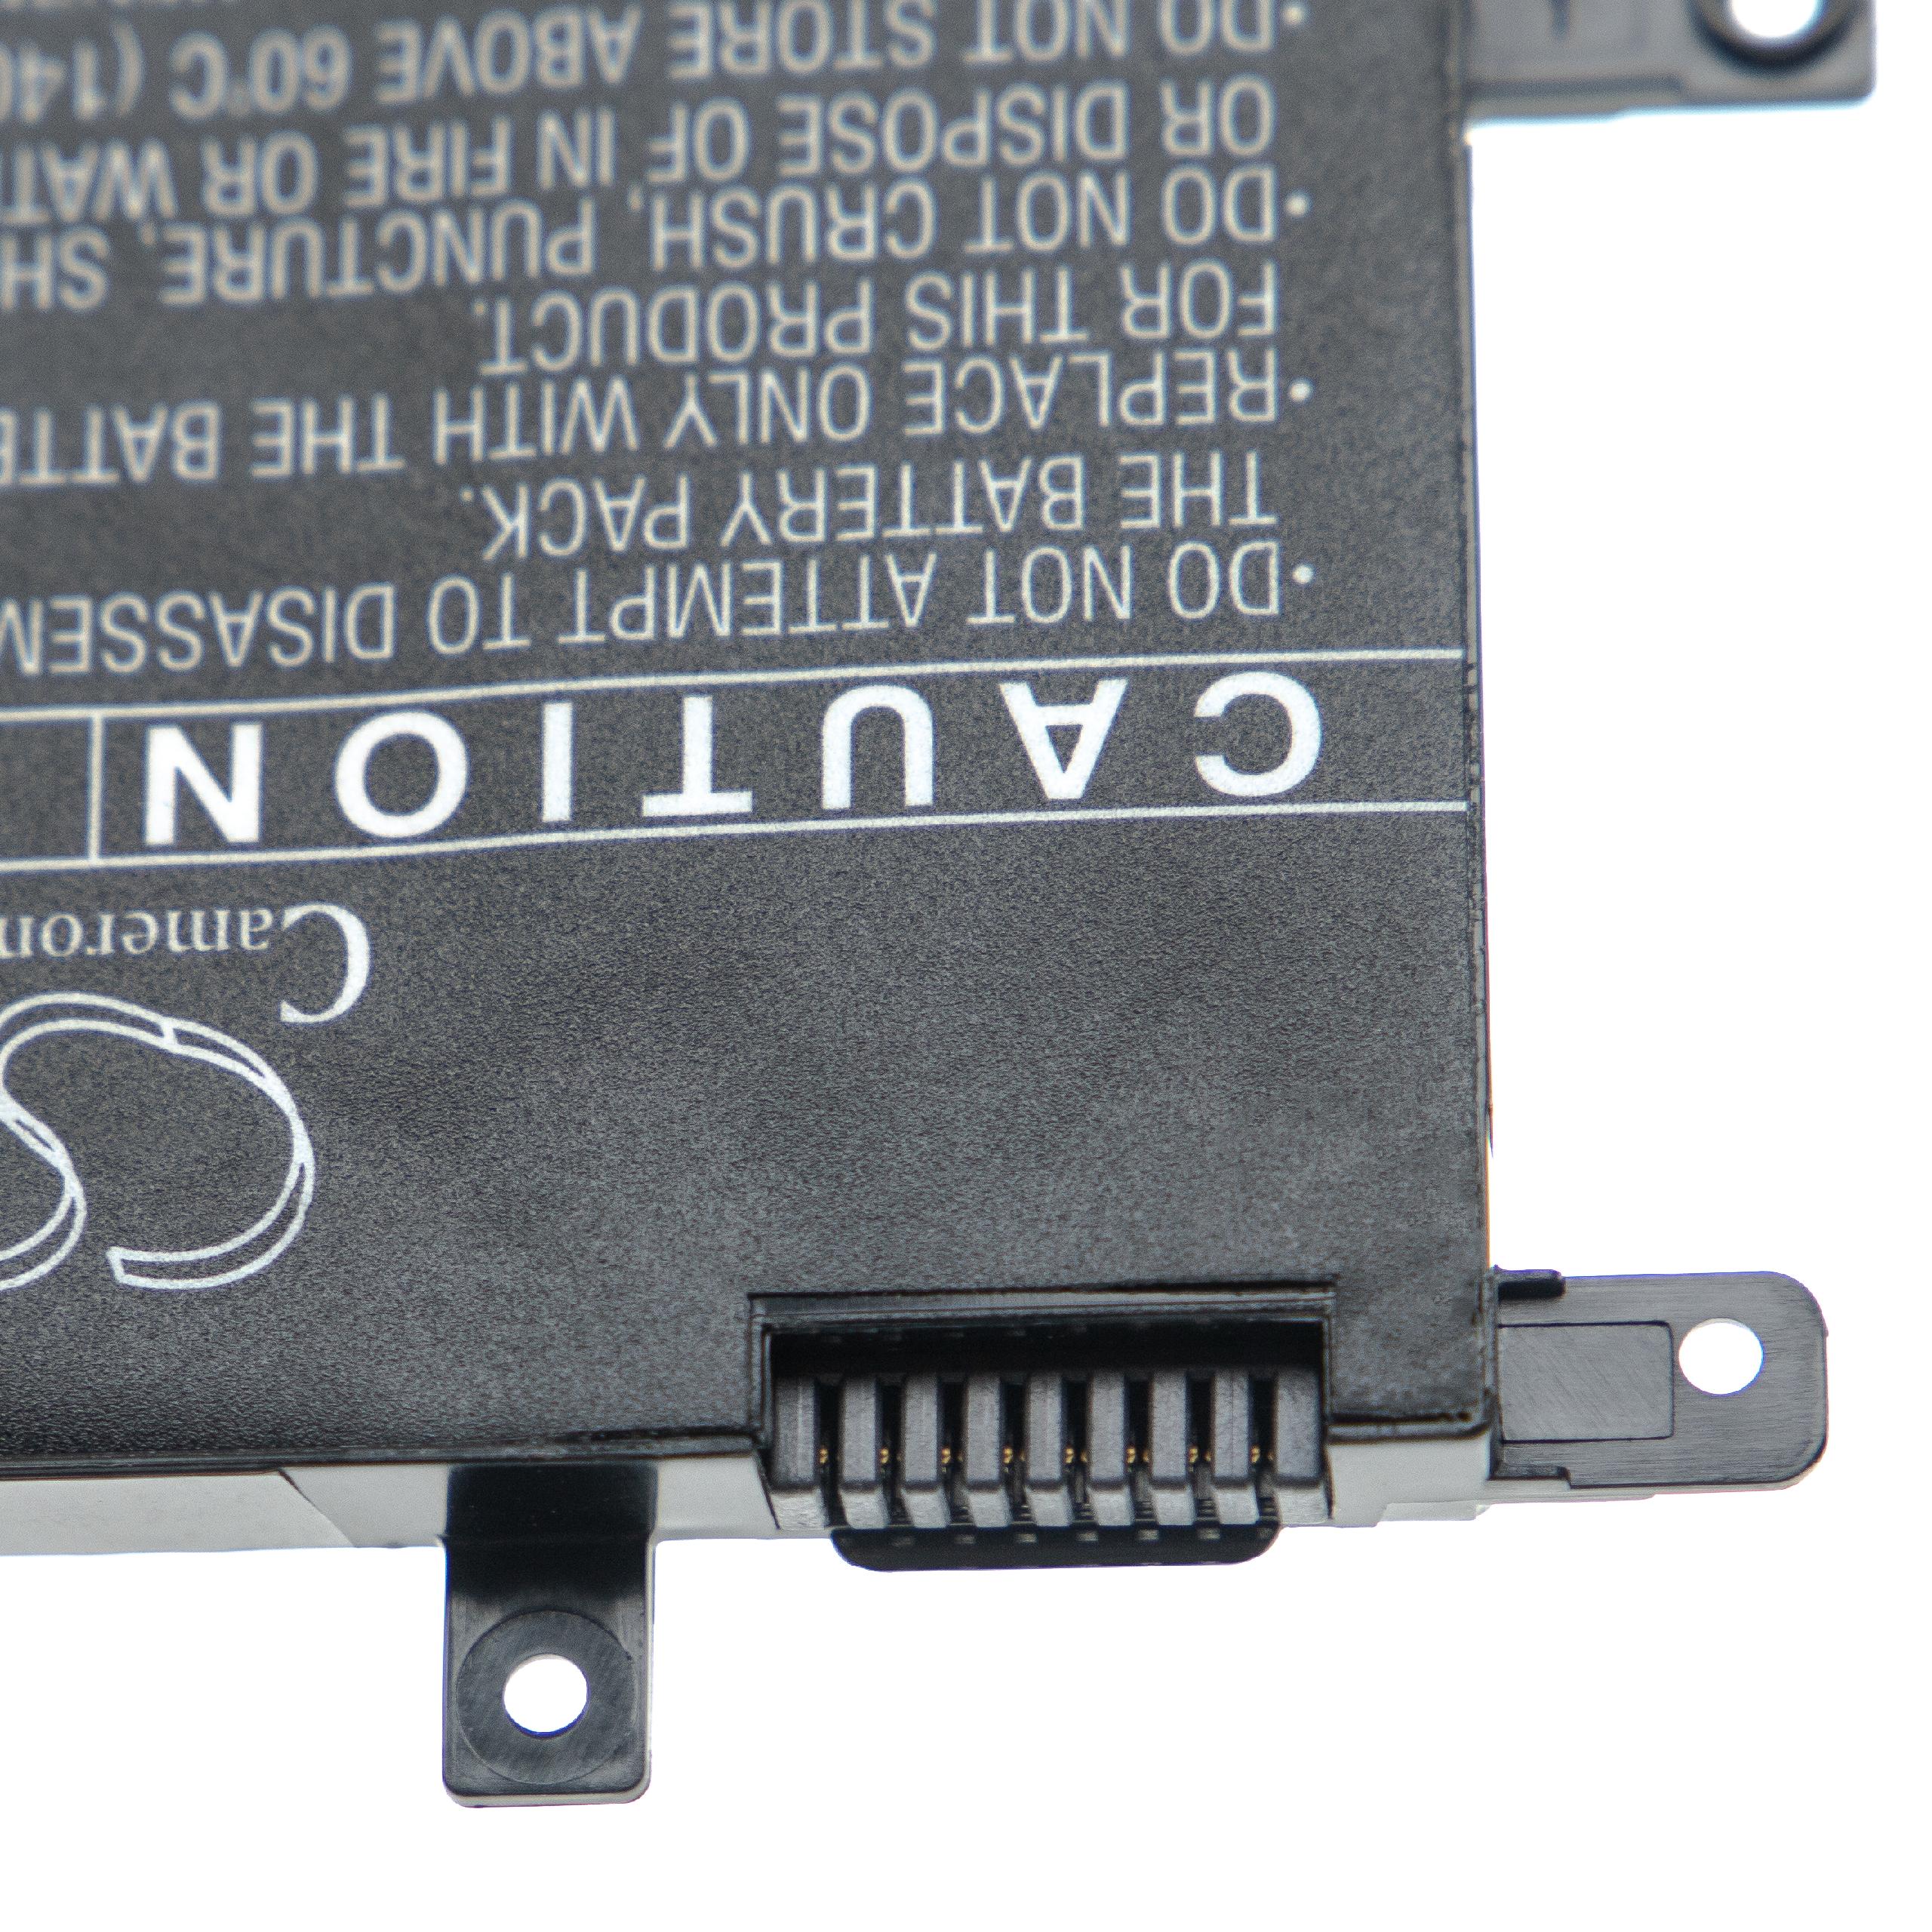 Notebook Battery Replacement for Asus 0B200-02550200, 0B200-02550000 - 4900mAh 7.6V Li-polymer, black